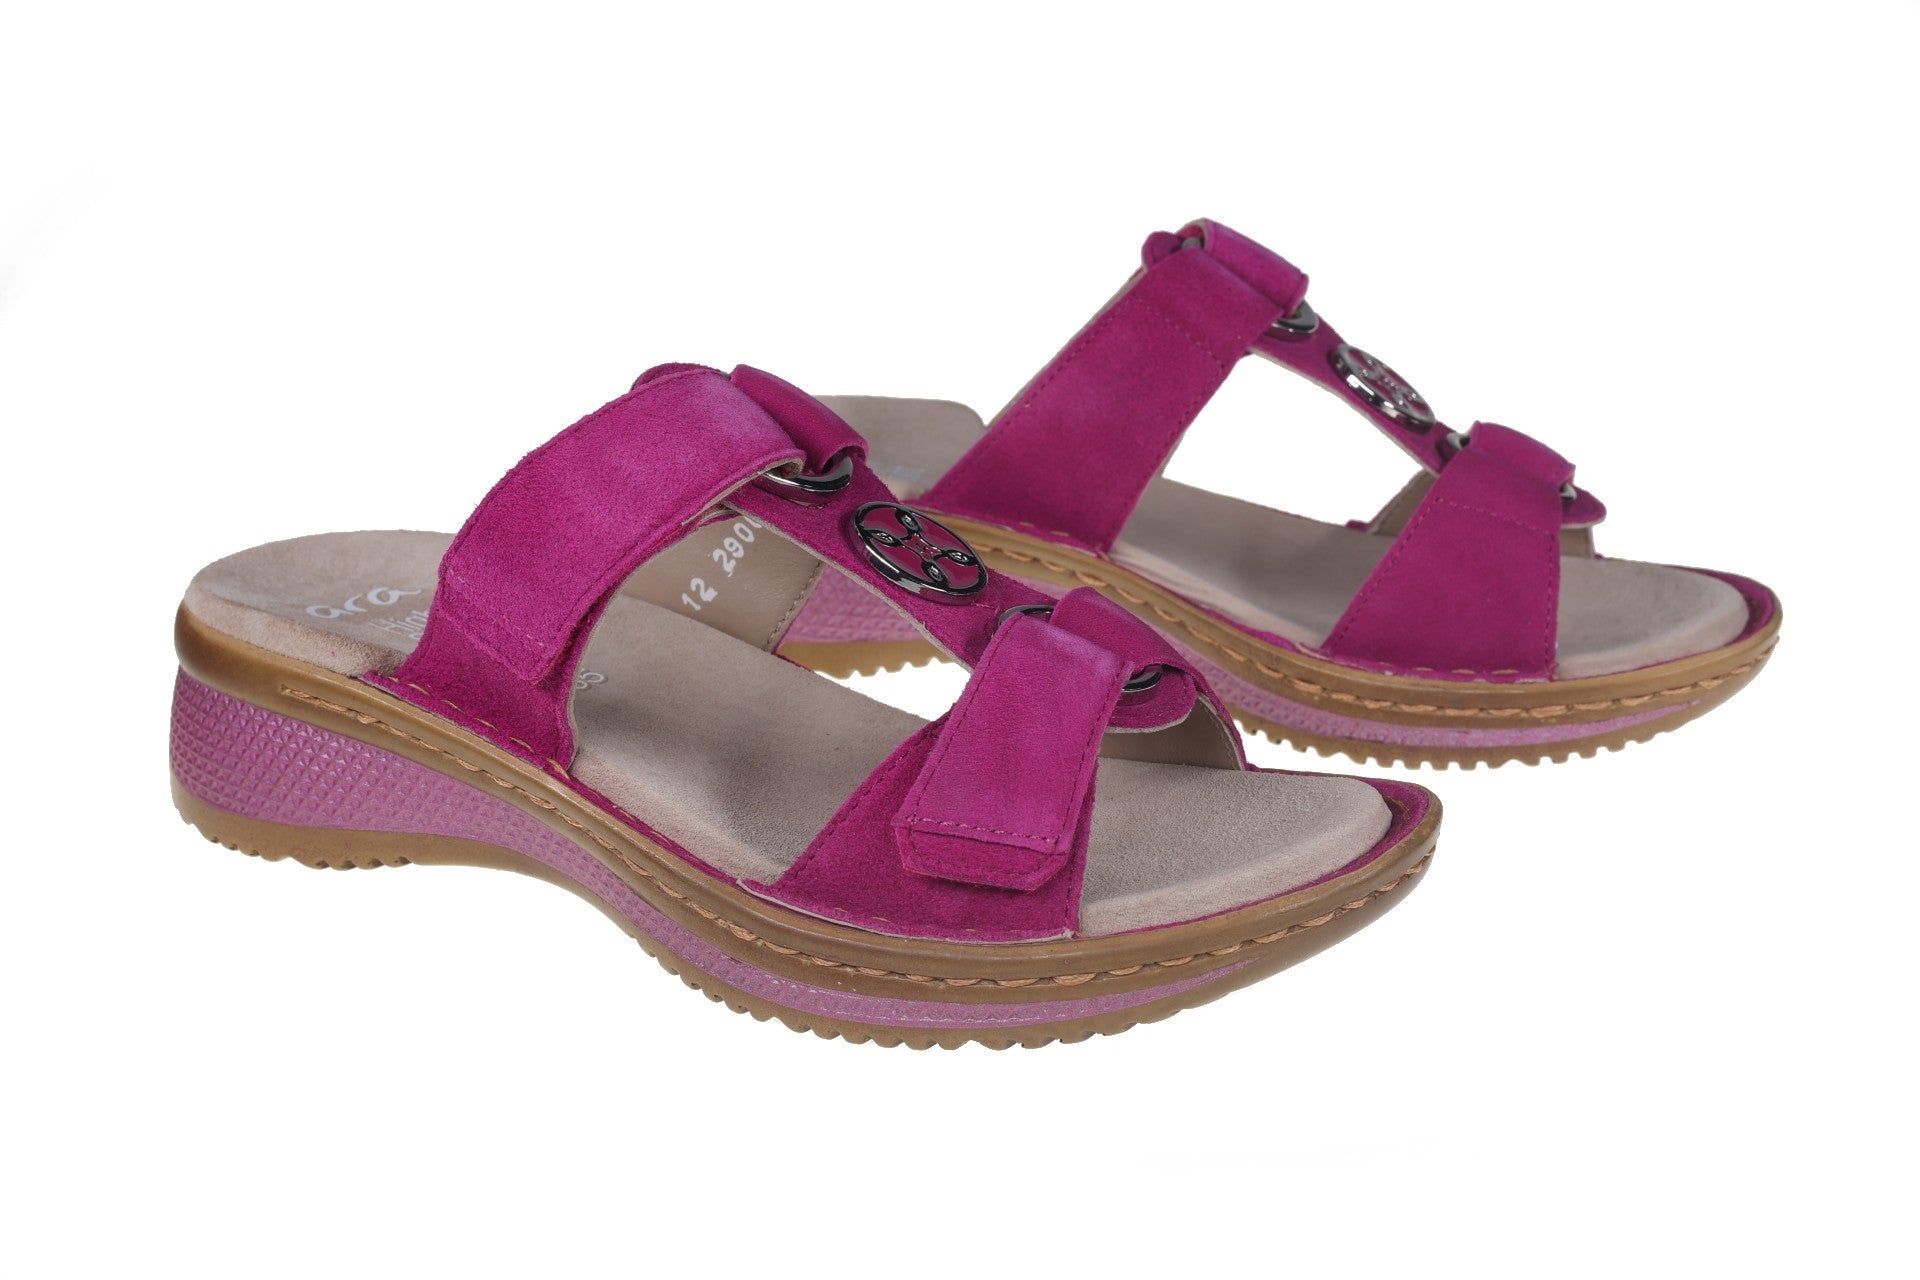 'Hawaii' women's sandal - pink - Chaplinshoes'Hawaii' women's sandal - pinkAra